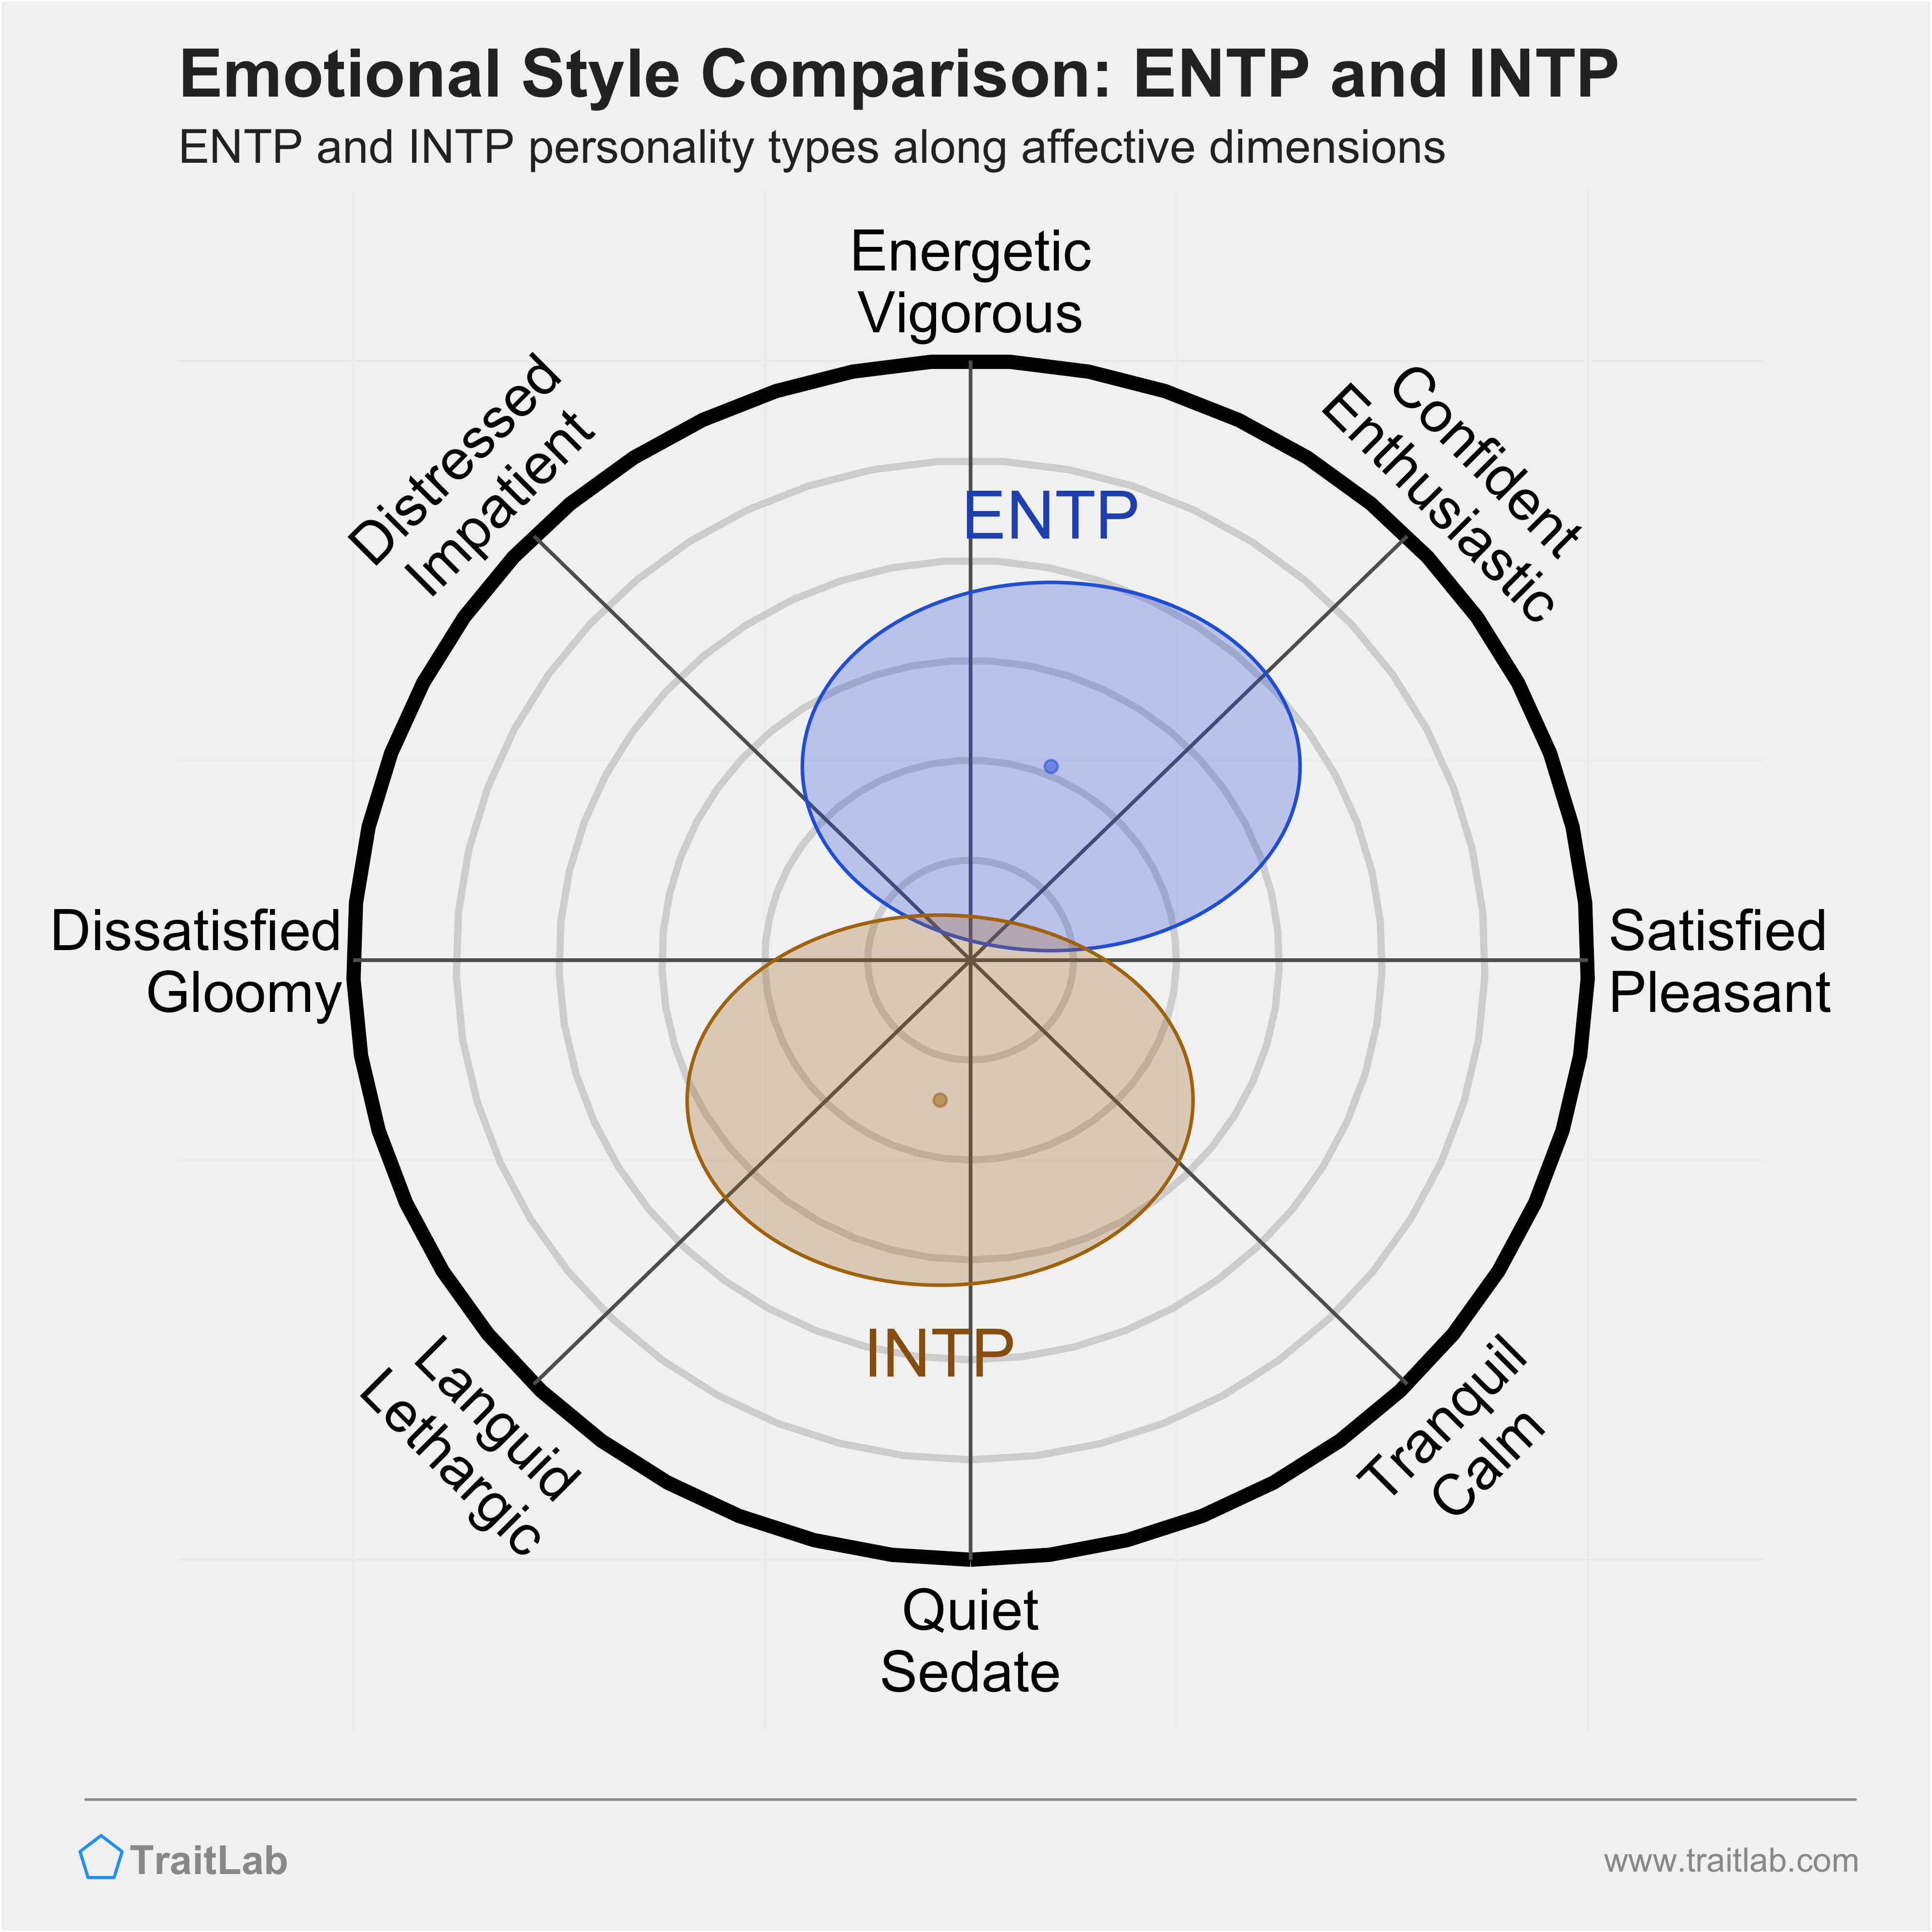 ENTP and INTP comparison across emotional (affective) dimensions